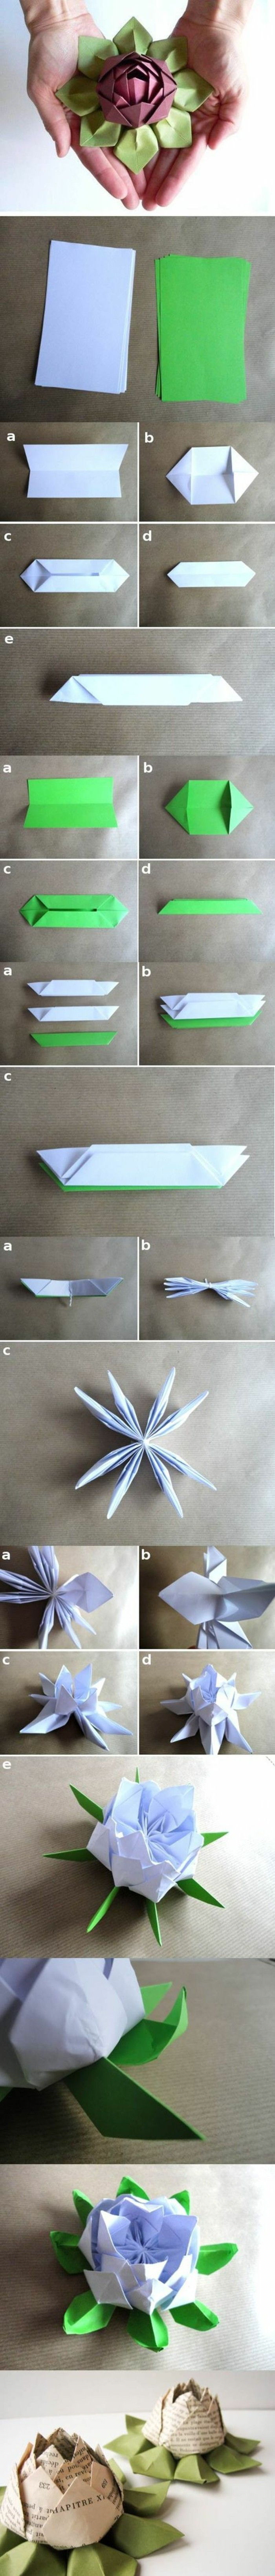 origami ros origami flower-vikning teknik-papper origami-vikning instruktion